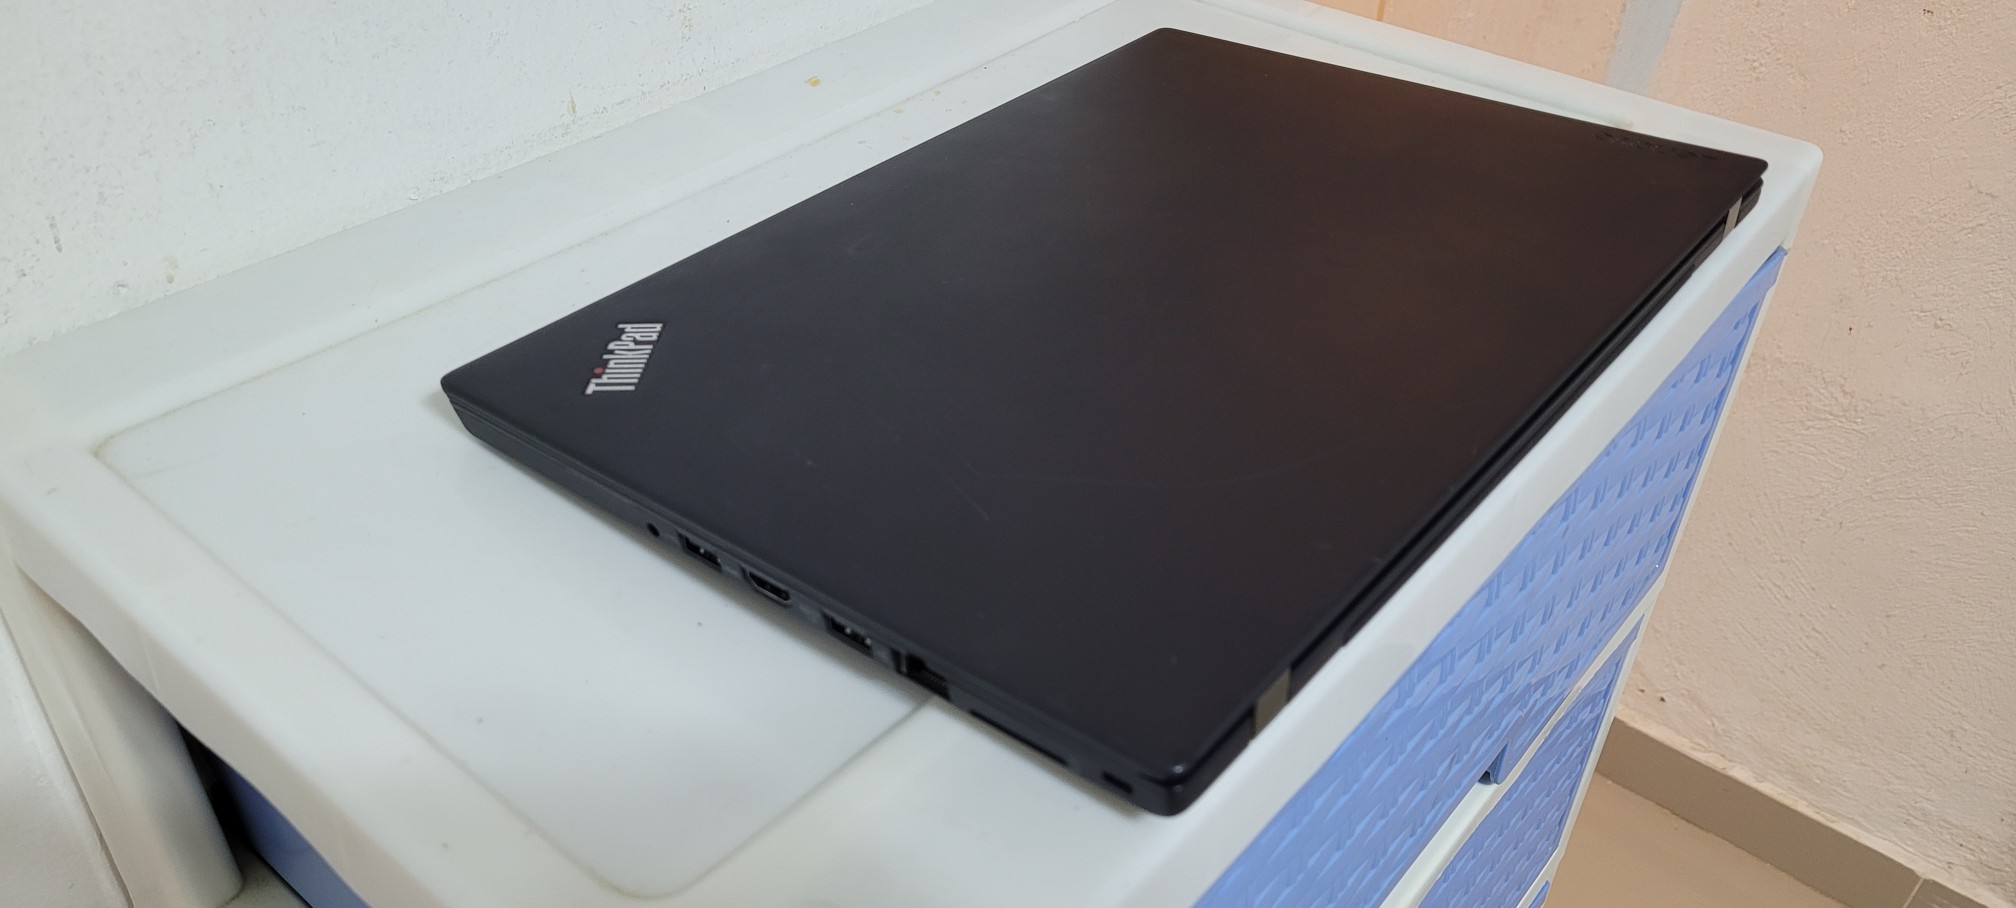 computadoras y laptops - laptop lenovo 14 Pulg Core i7 Ram 8gb Disco 256gb SSD Solido Wifi 2